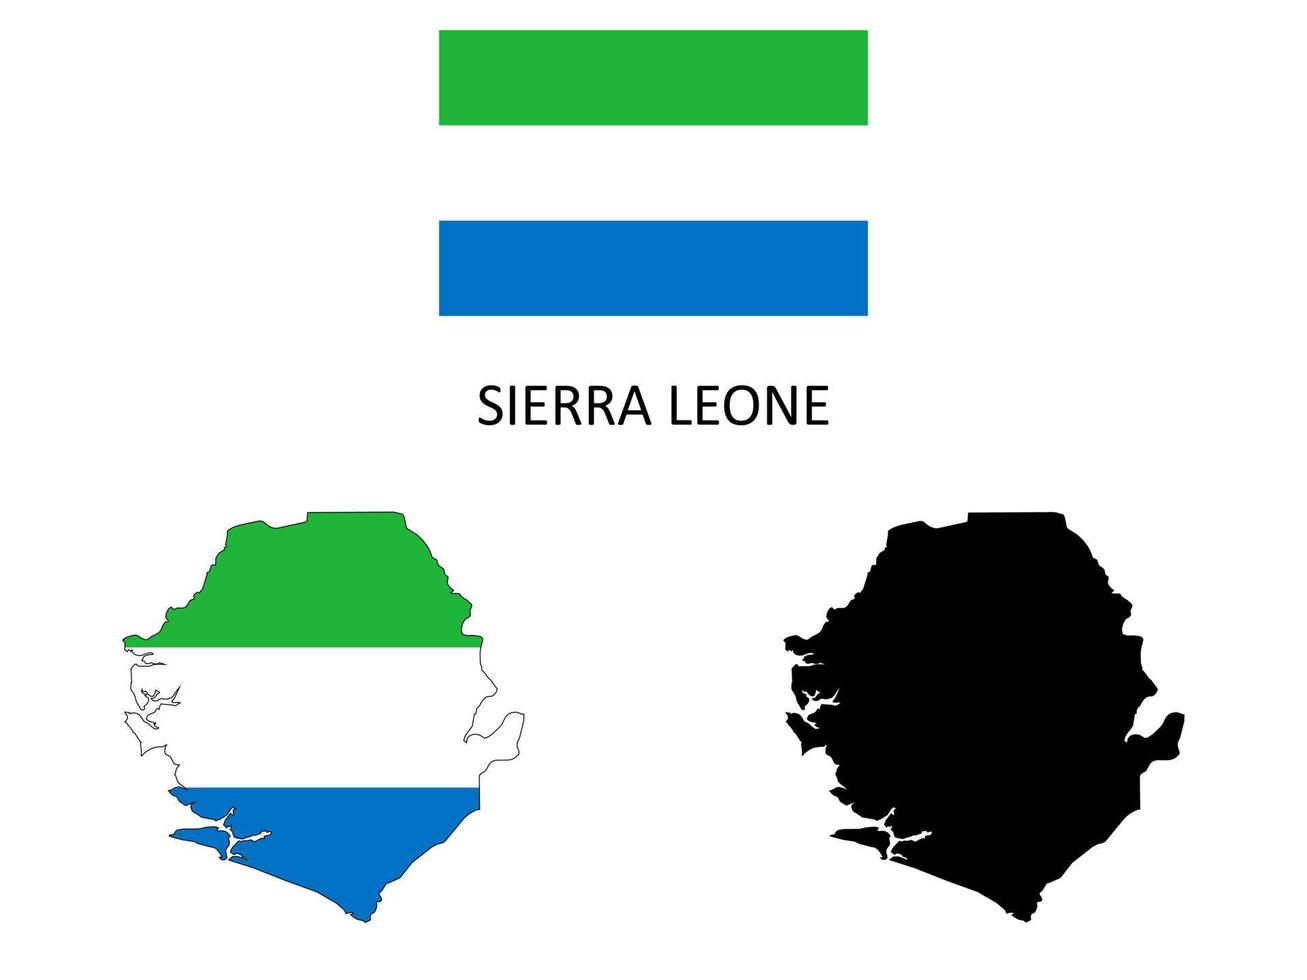 Sierra Leone flag and map illustration vector